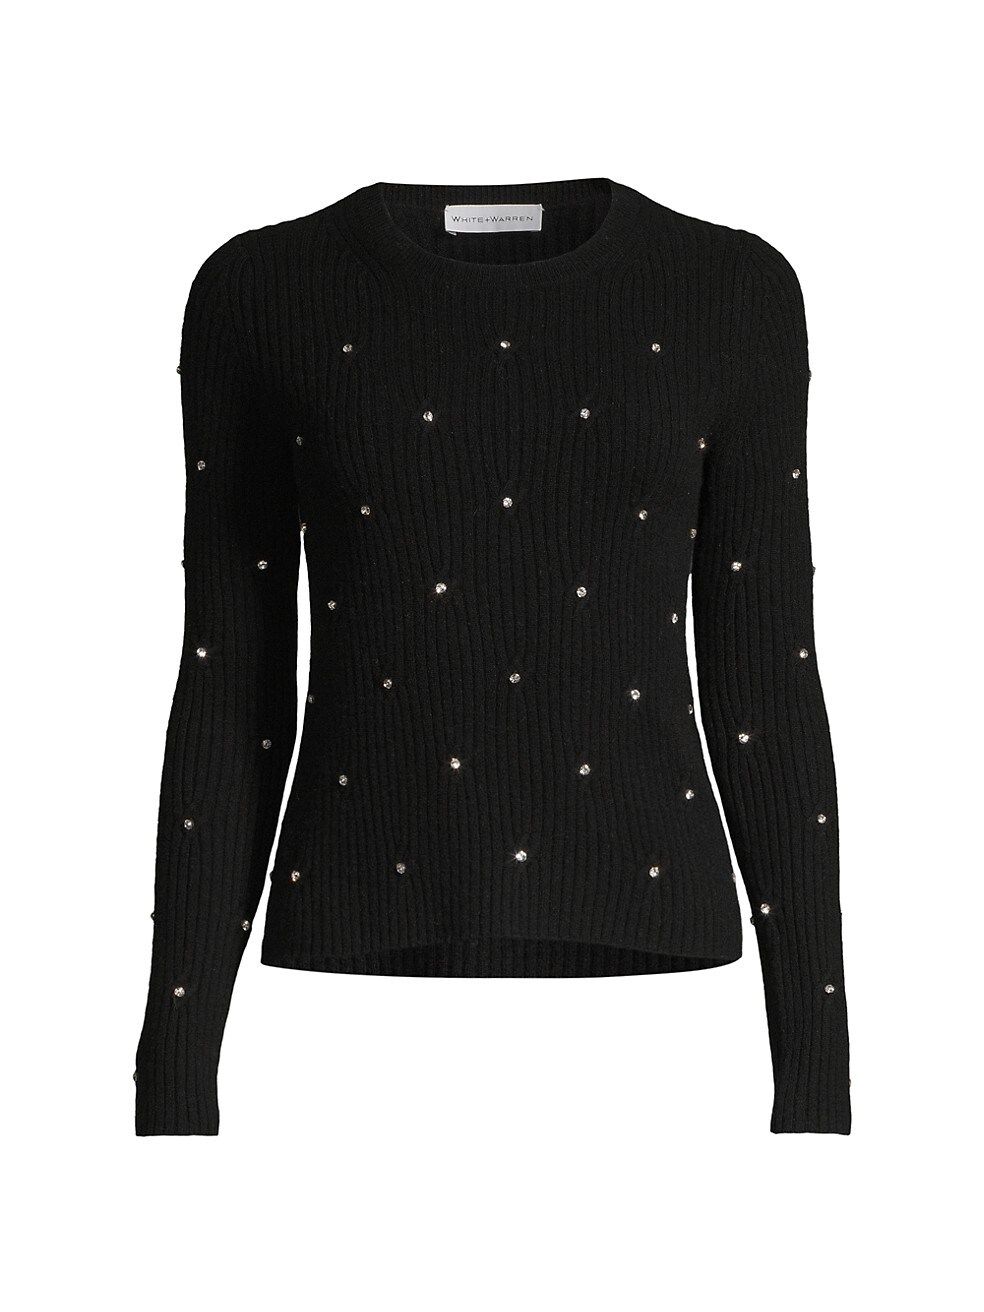 White + Warren Cashmere Embellished Sweater | Saks Fifth Avenue